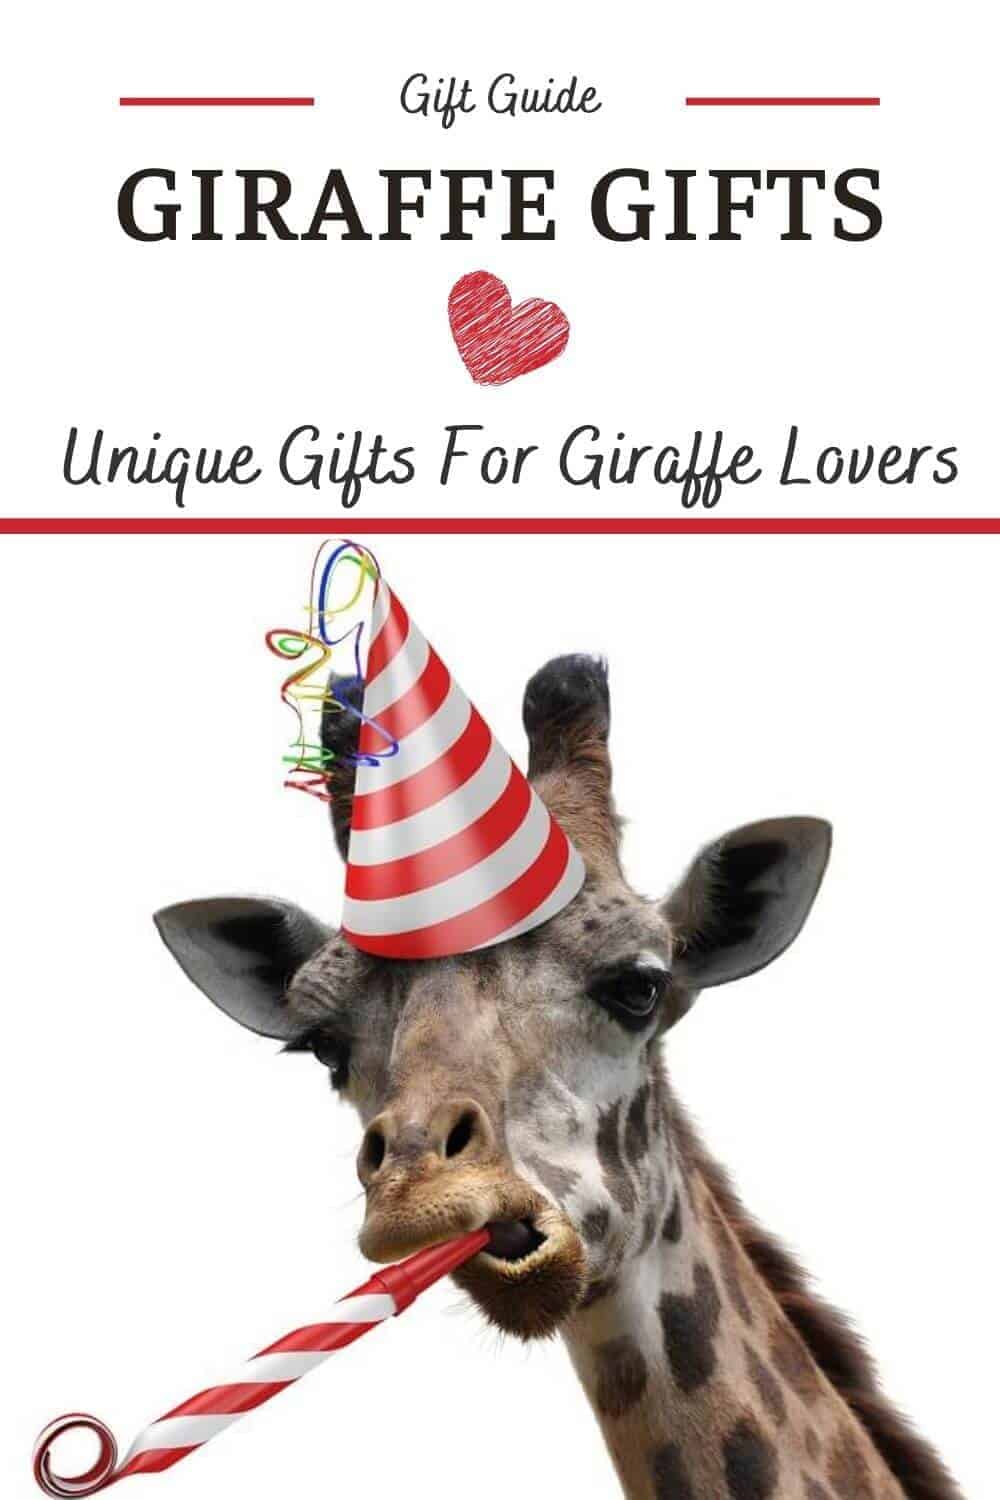 Giraffe Gifts - Gift Guide for People Who Love Giraffes